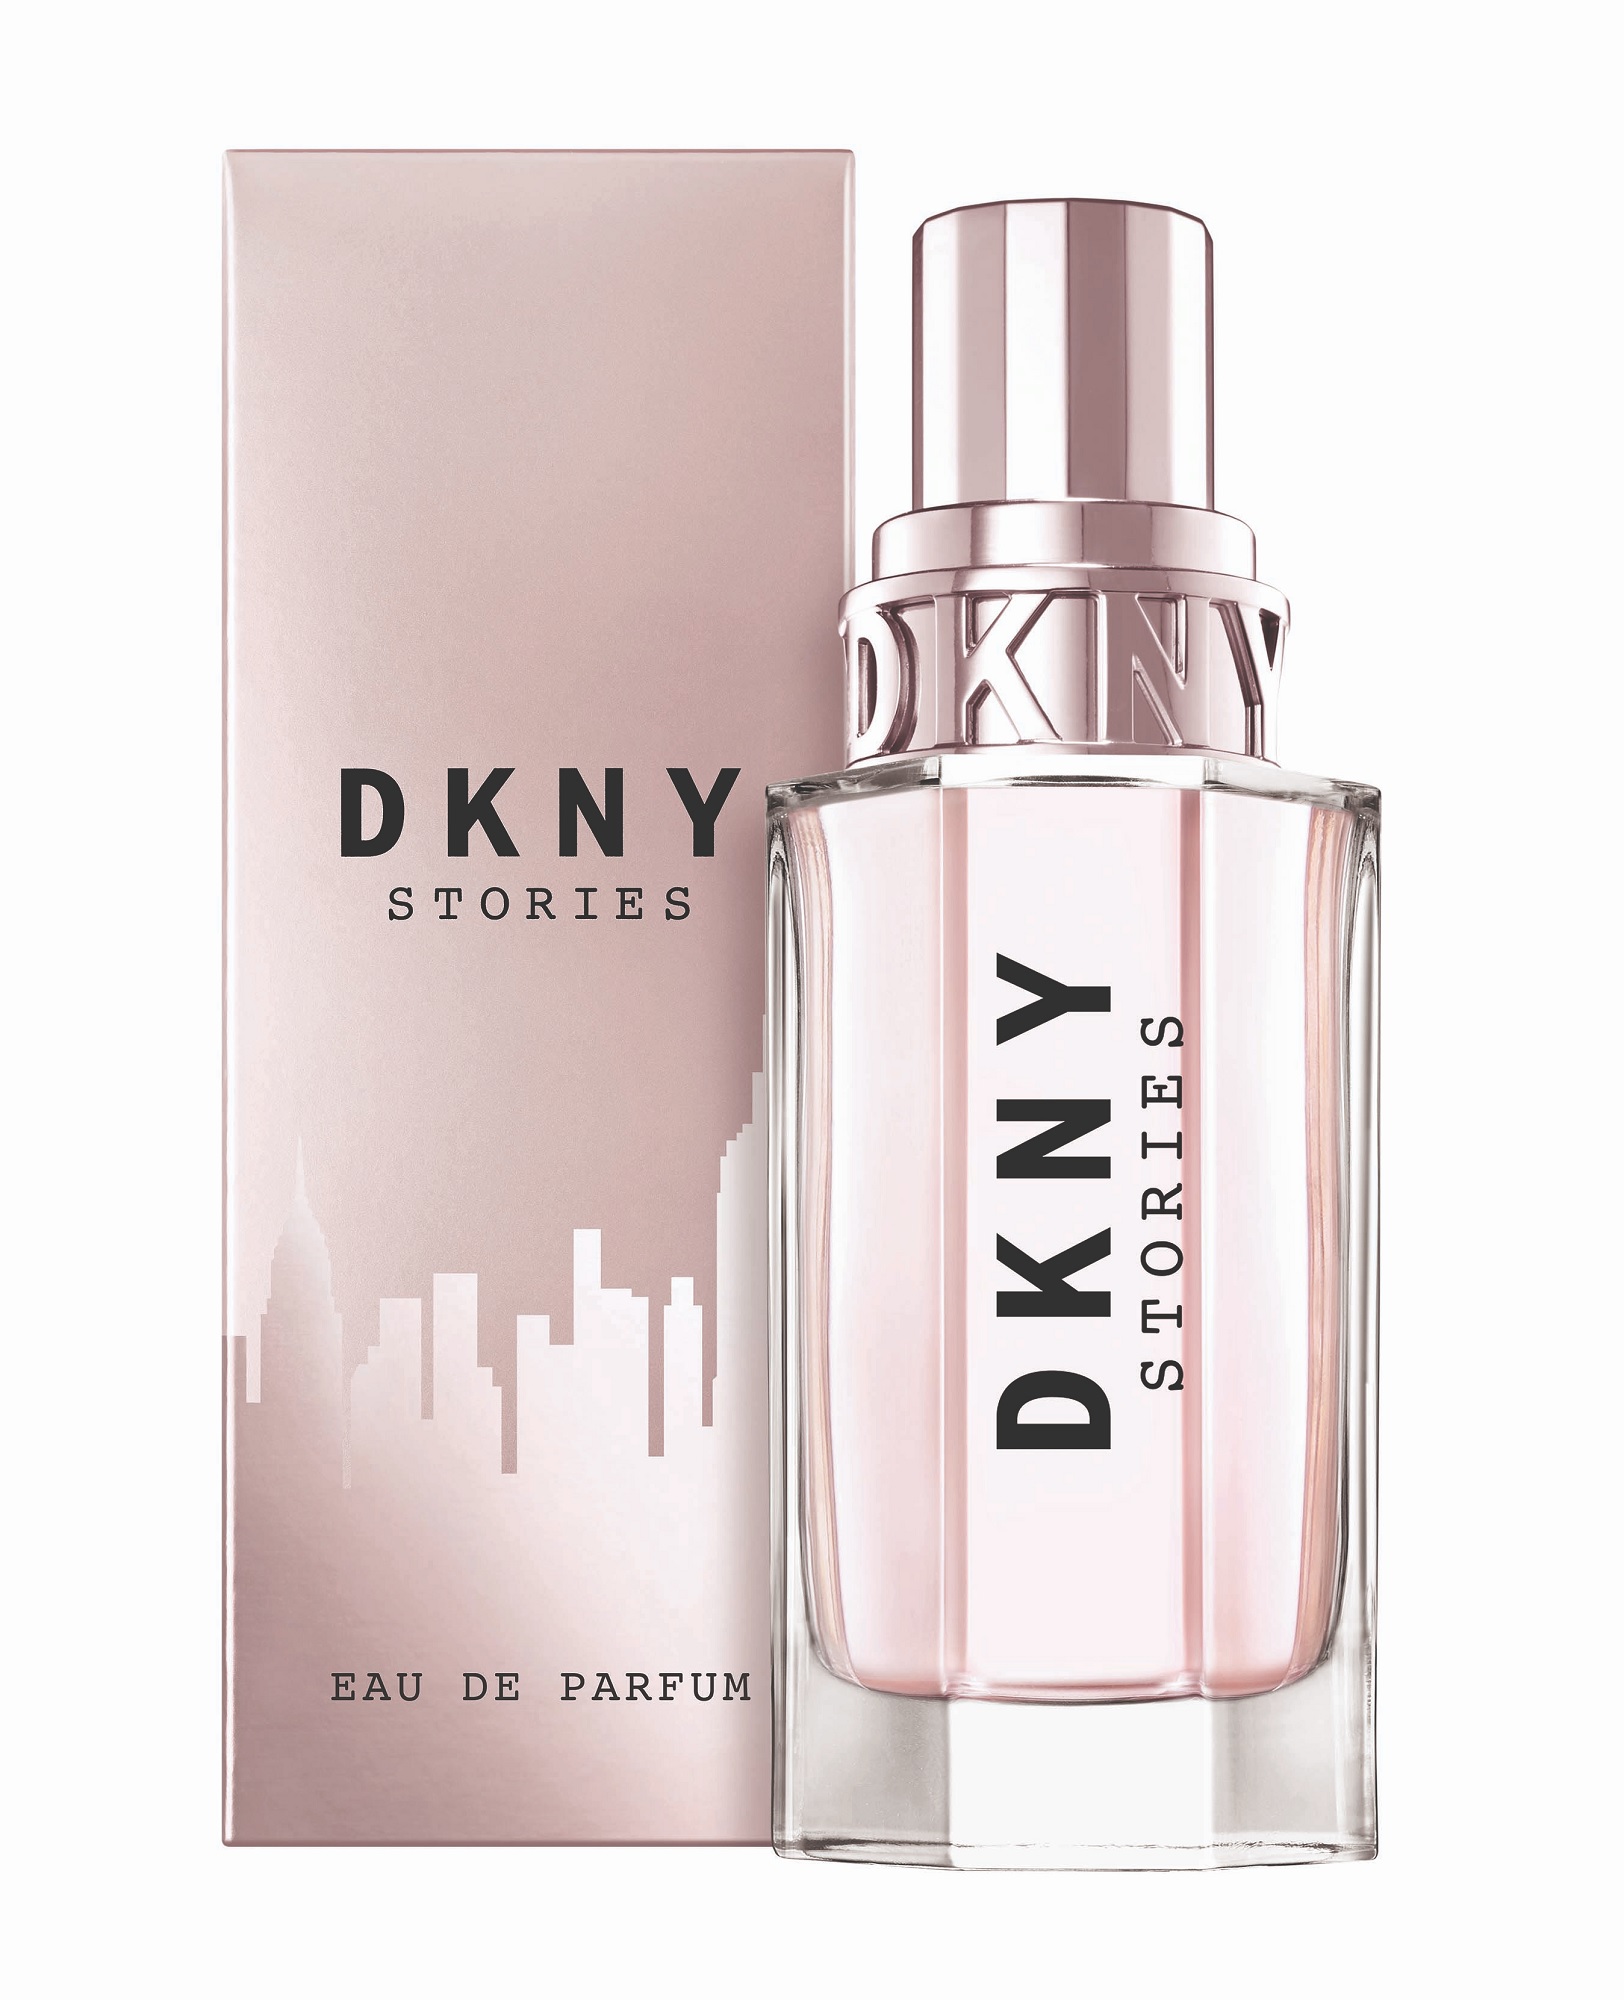 DKNY Stories packshot